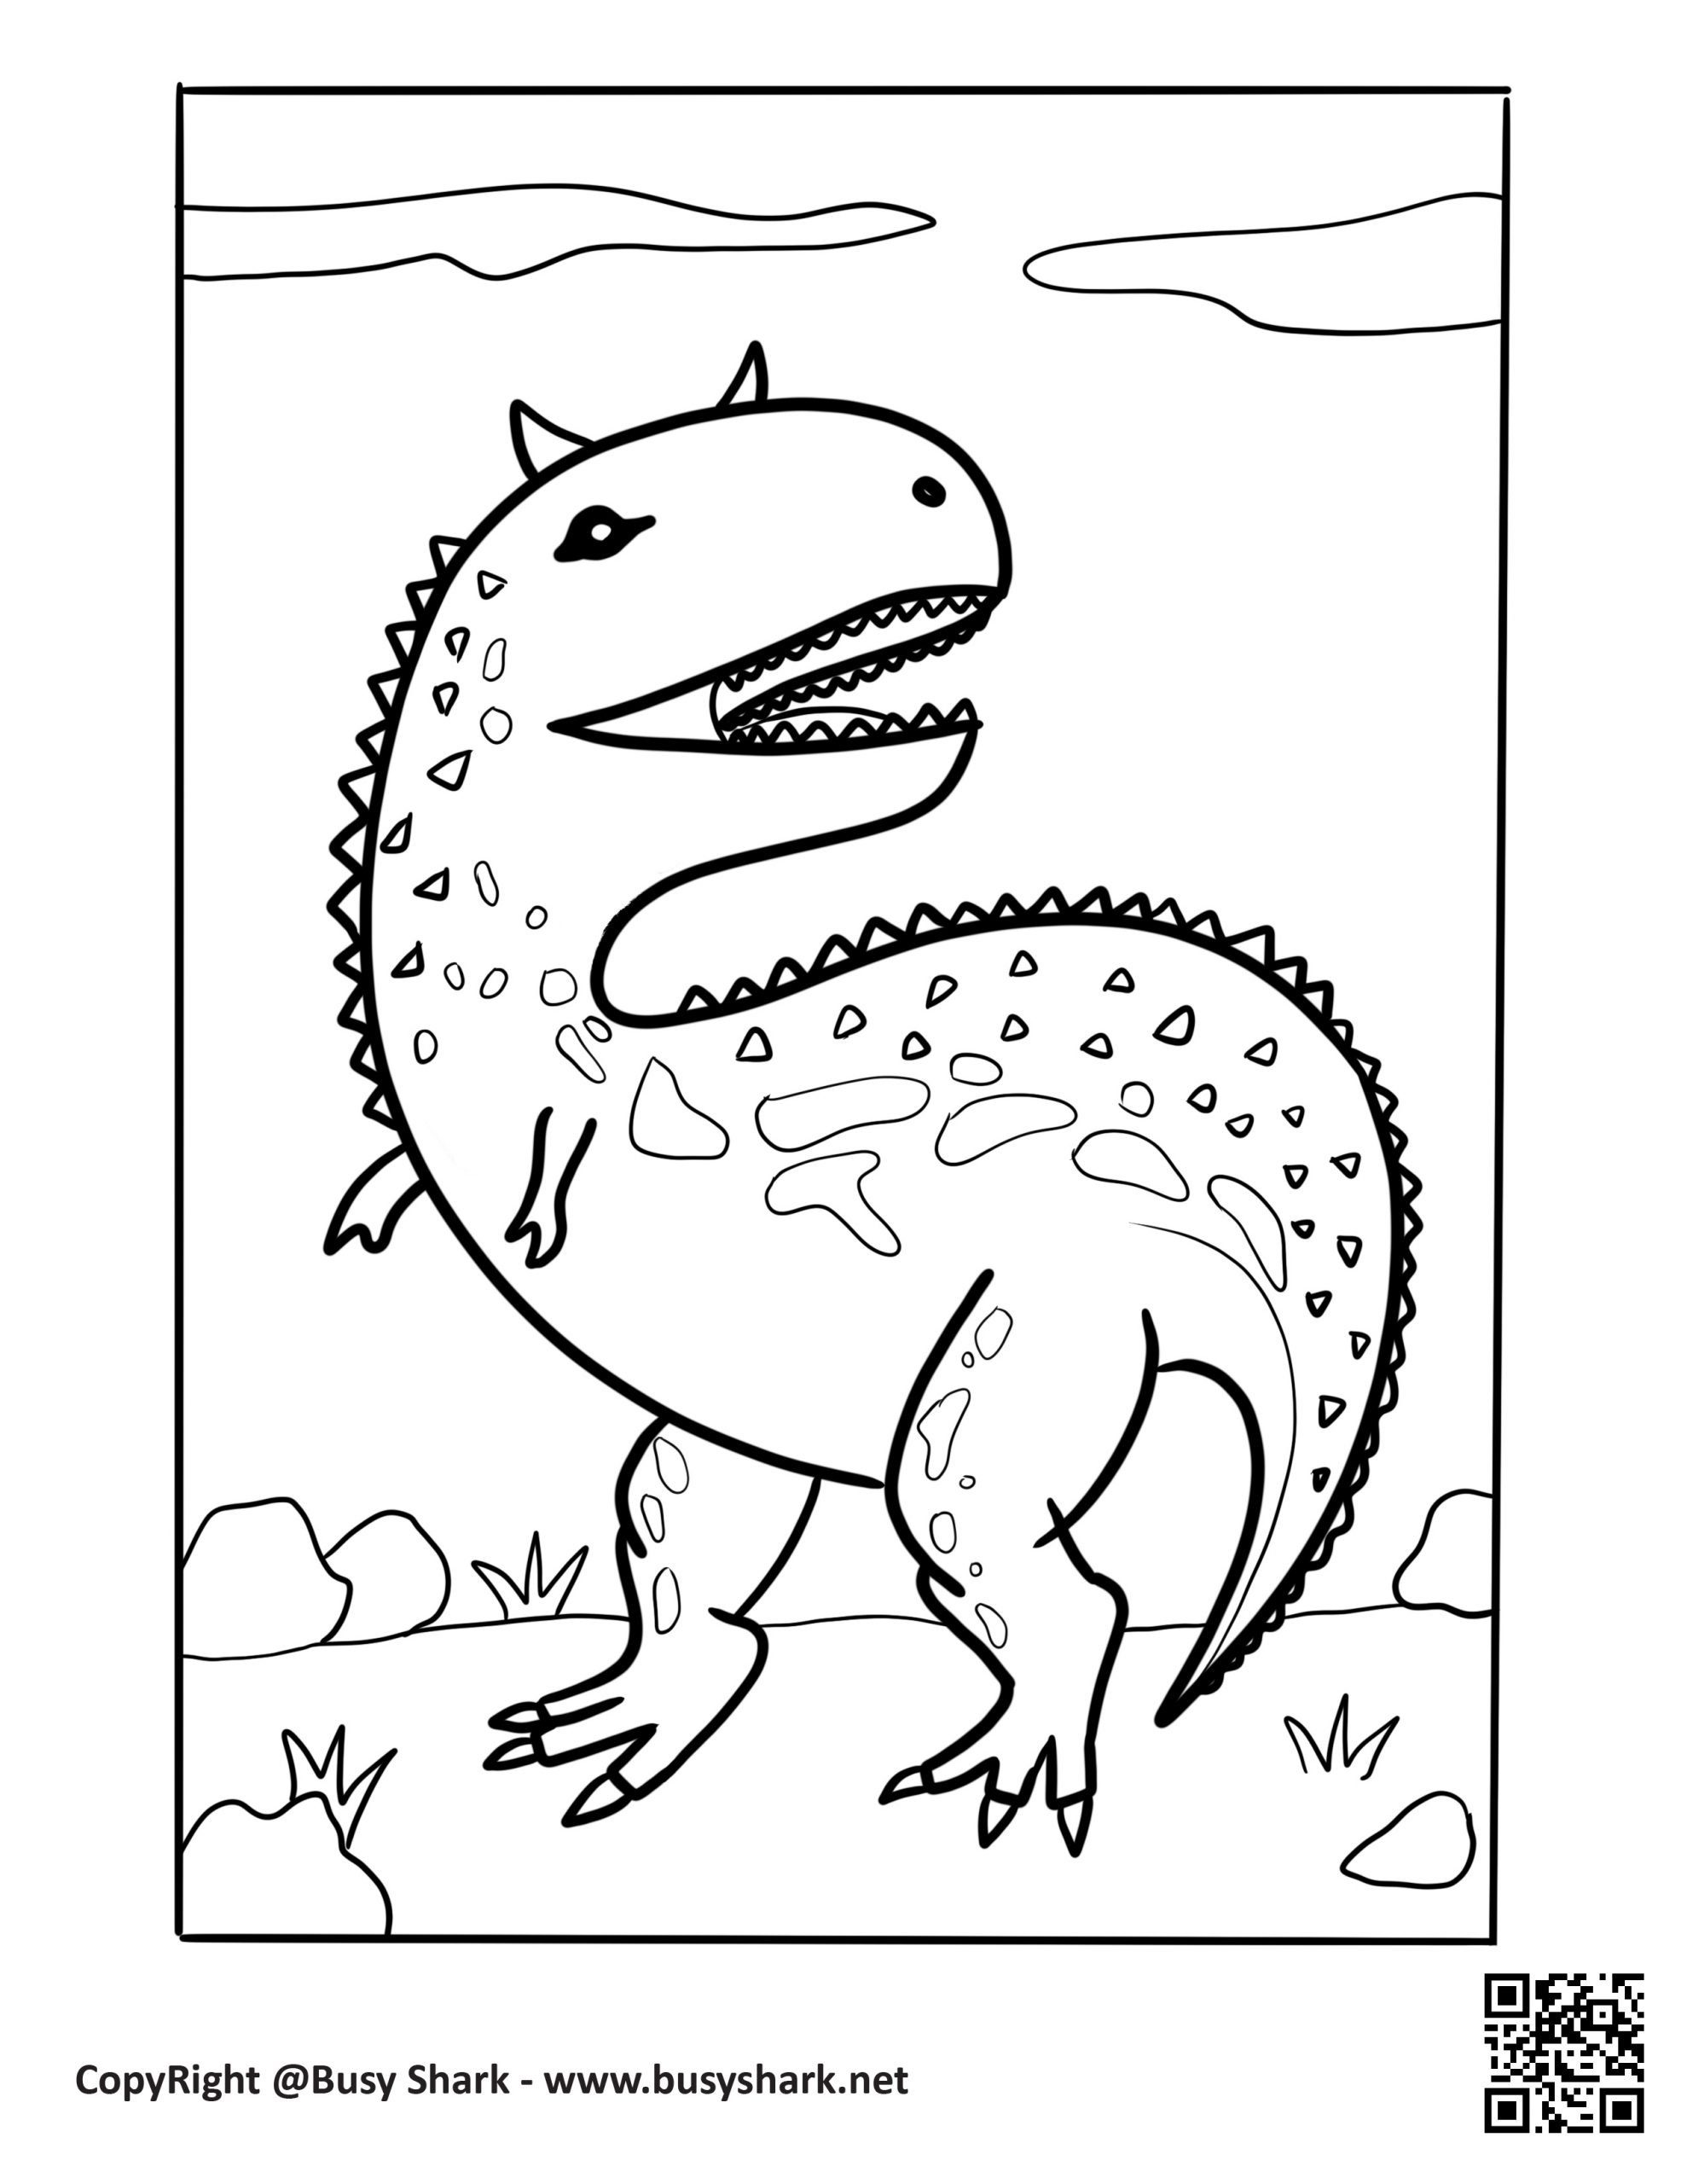 Carnotaurus coloring page free printable